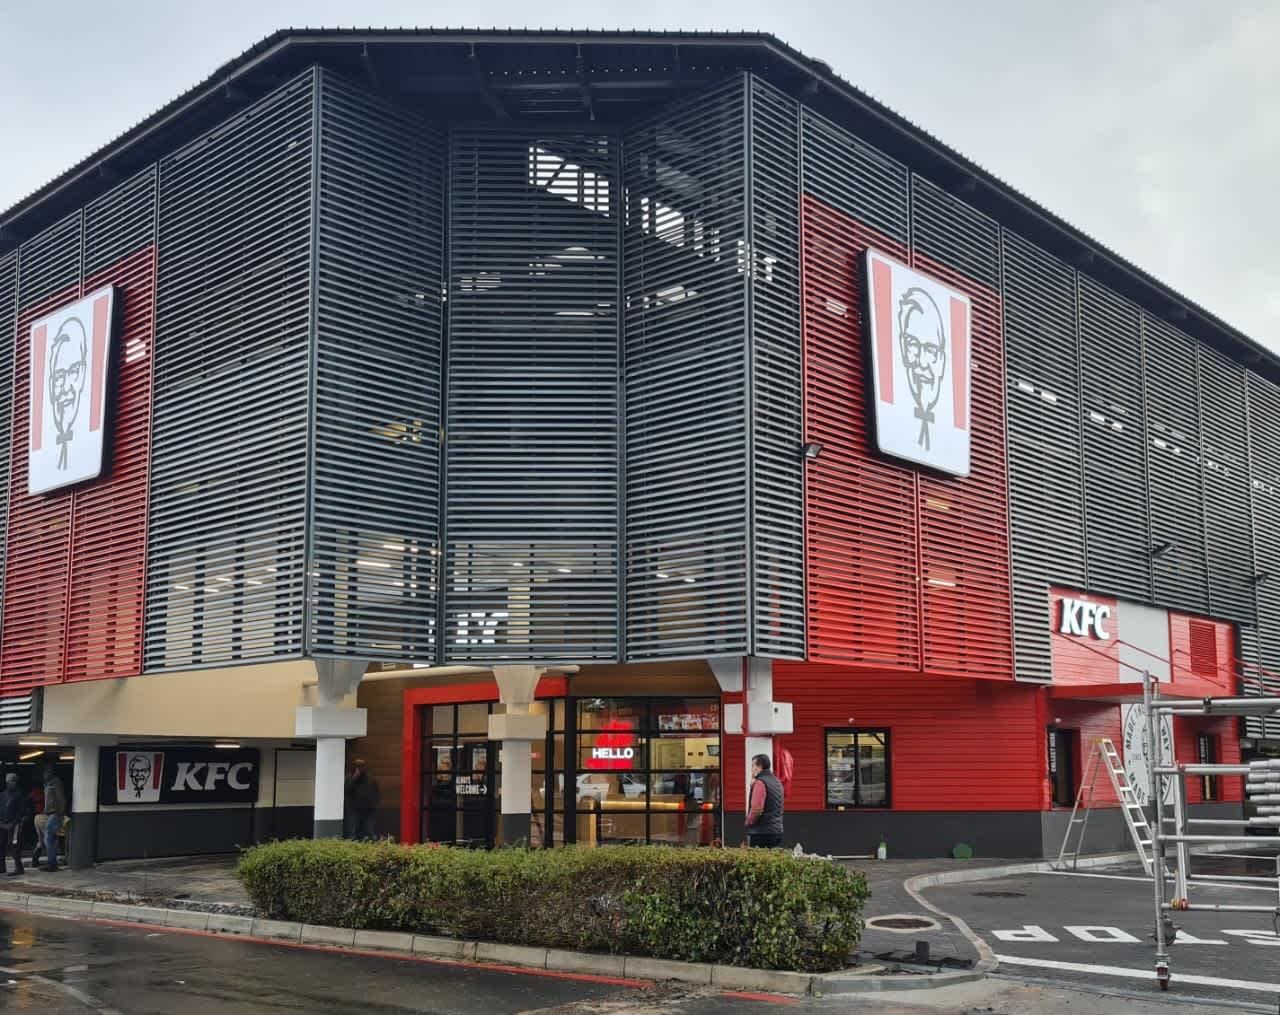 South Africa: KFC launches the ‘Elizabedi bundle onto the market